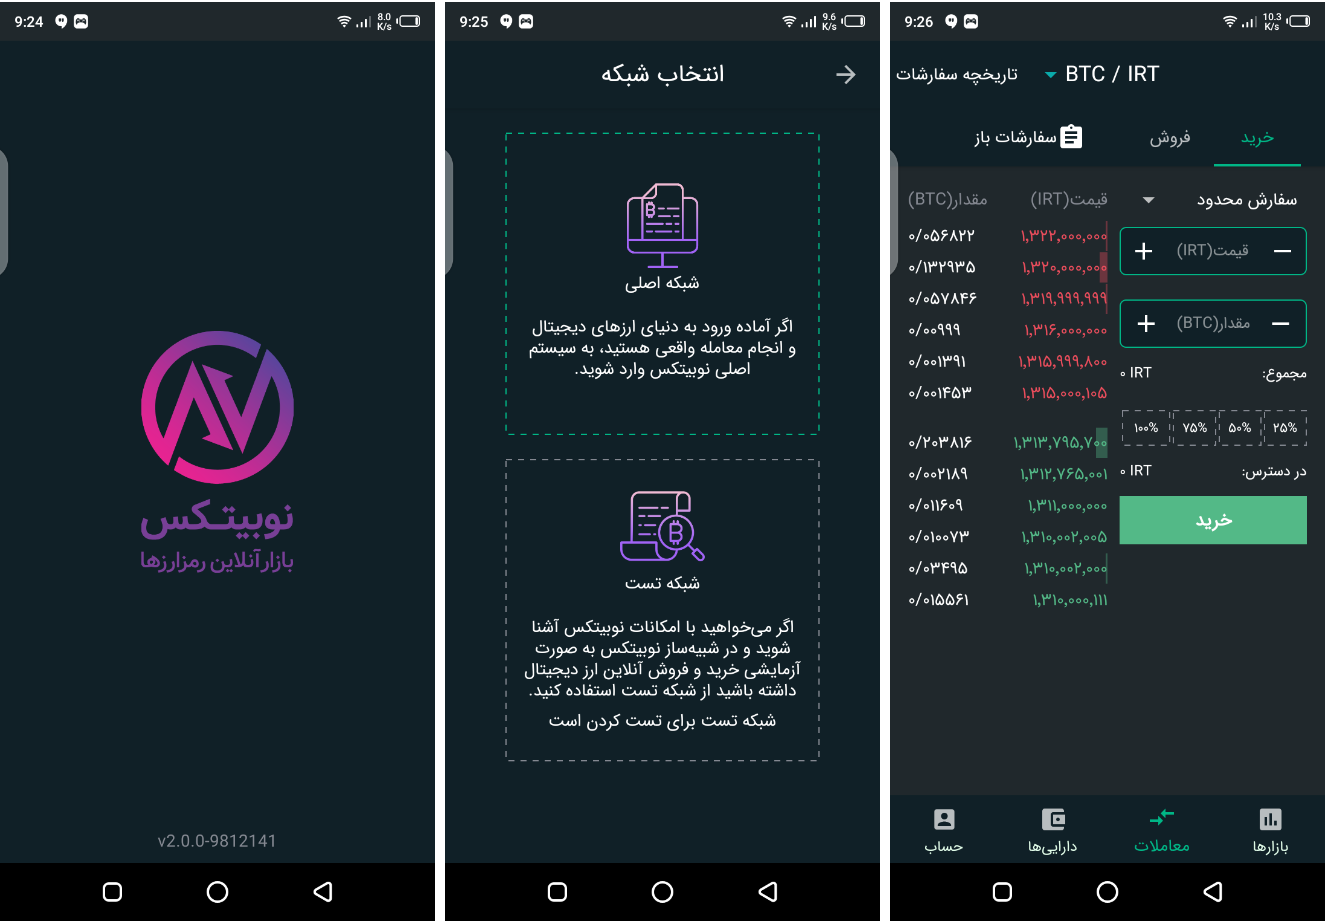 Nobitex mobile app screenshot